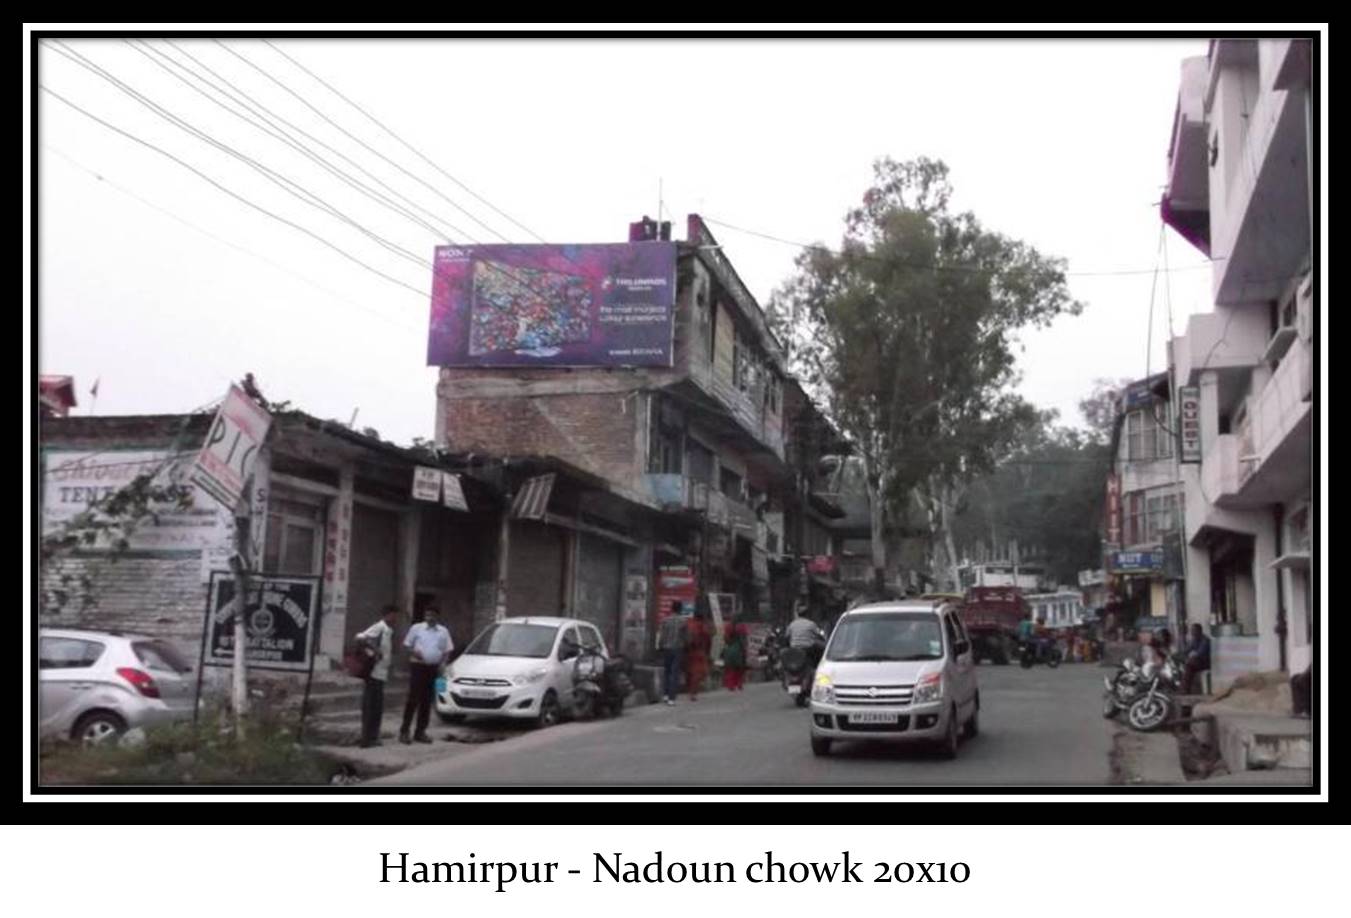 Nadoun chowk, Hamirpur